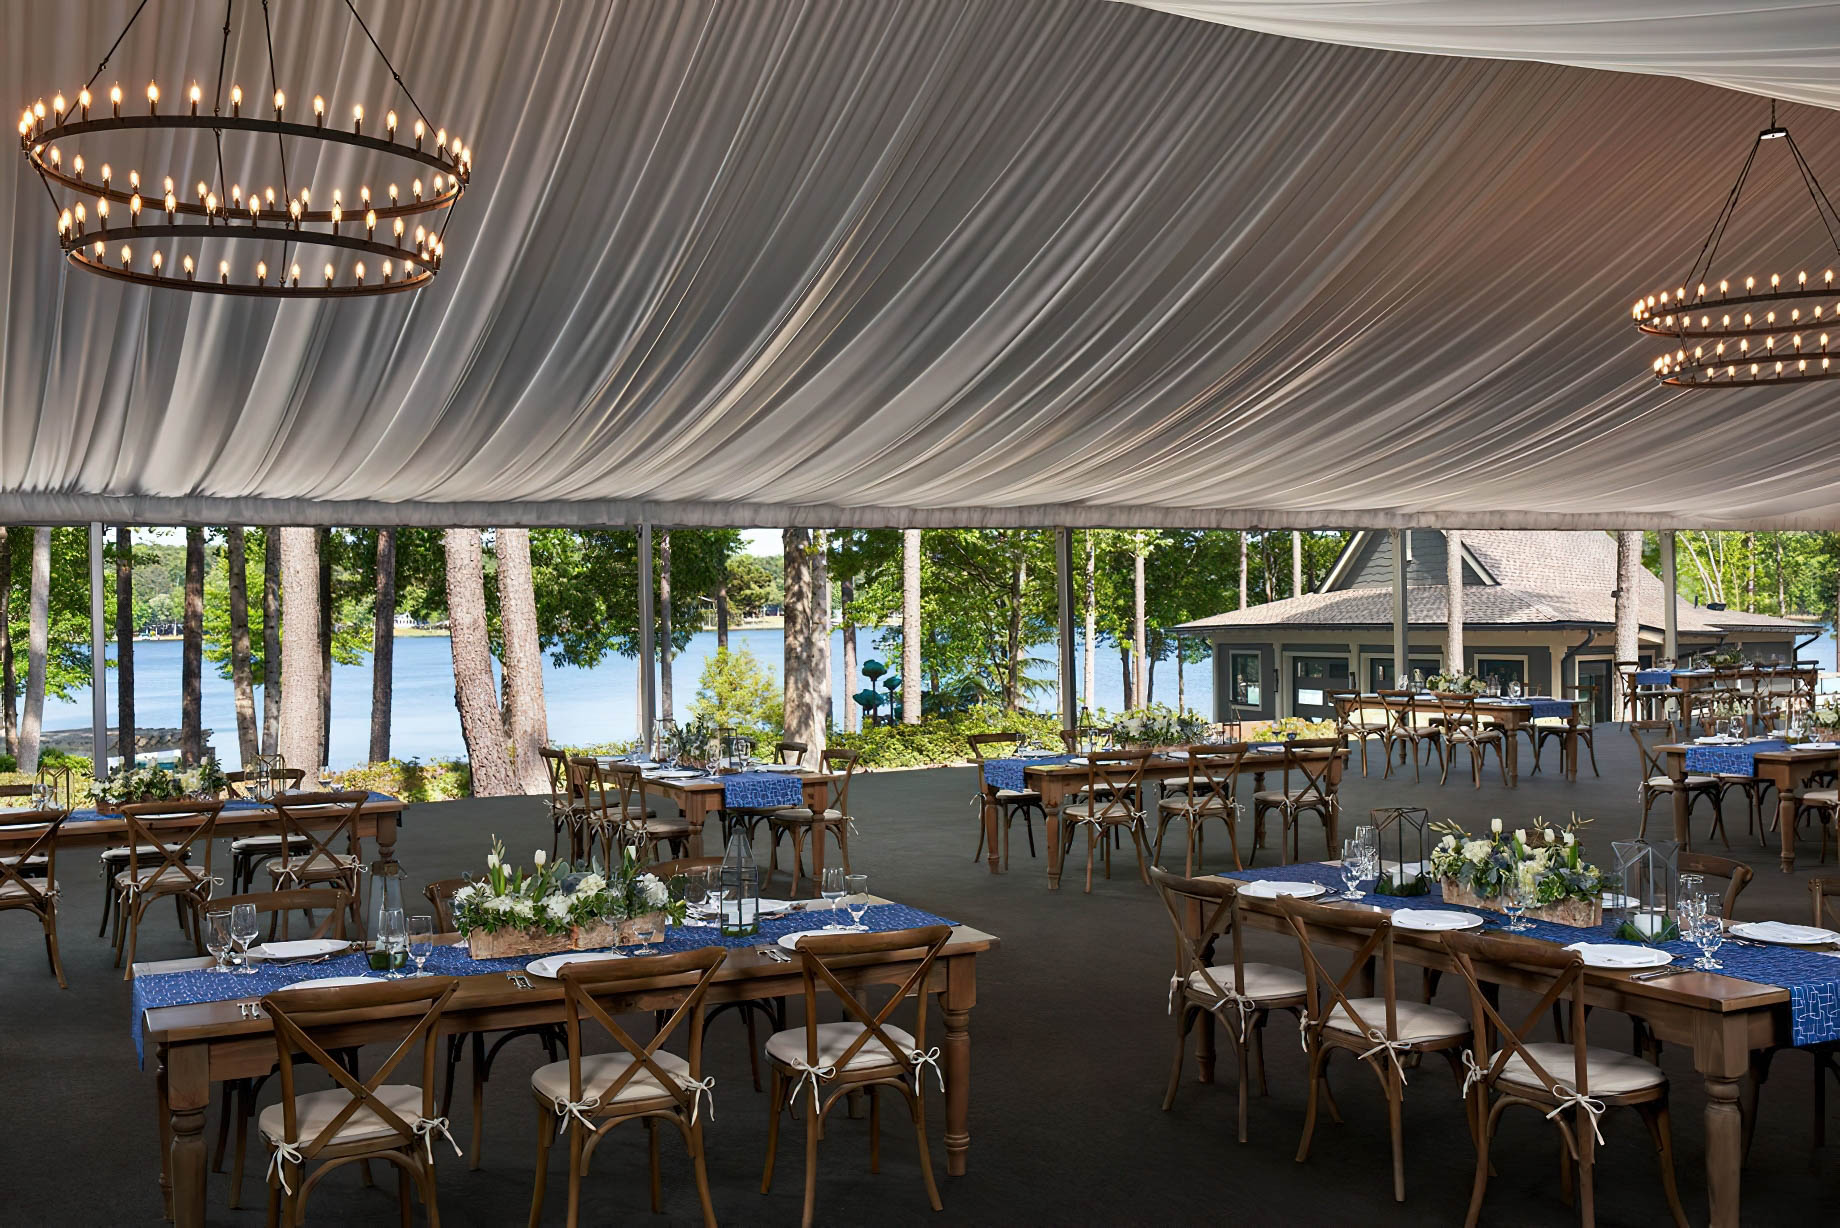 122 – The Ritz-Carlton Reynolds, Lake Oconee Resort – Greensboro, GA, USA – Forest Tent Wedding Reception